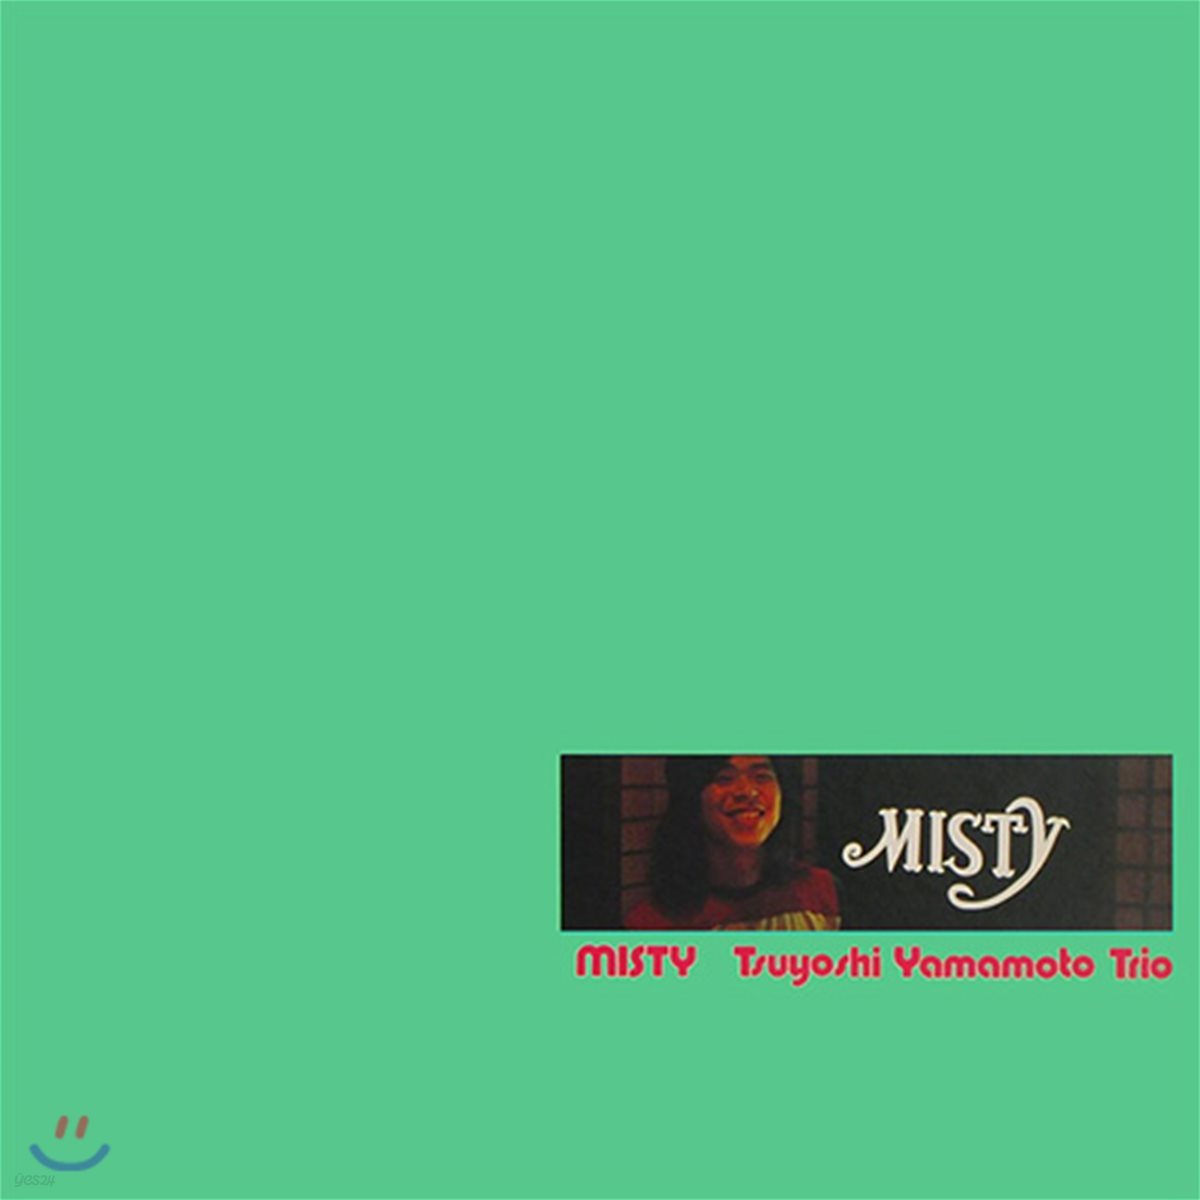 Tsuyoshi Yamamoto Trio (츠요시 야마모토 트리오) - Misty [2LP]